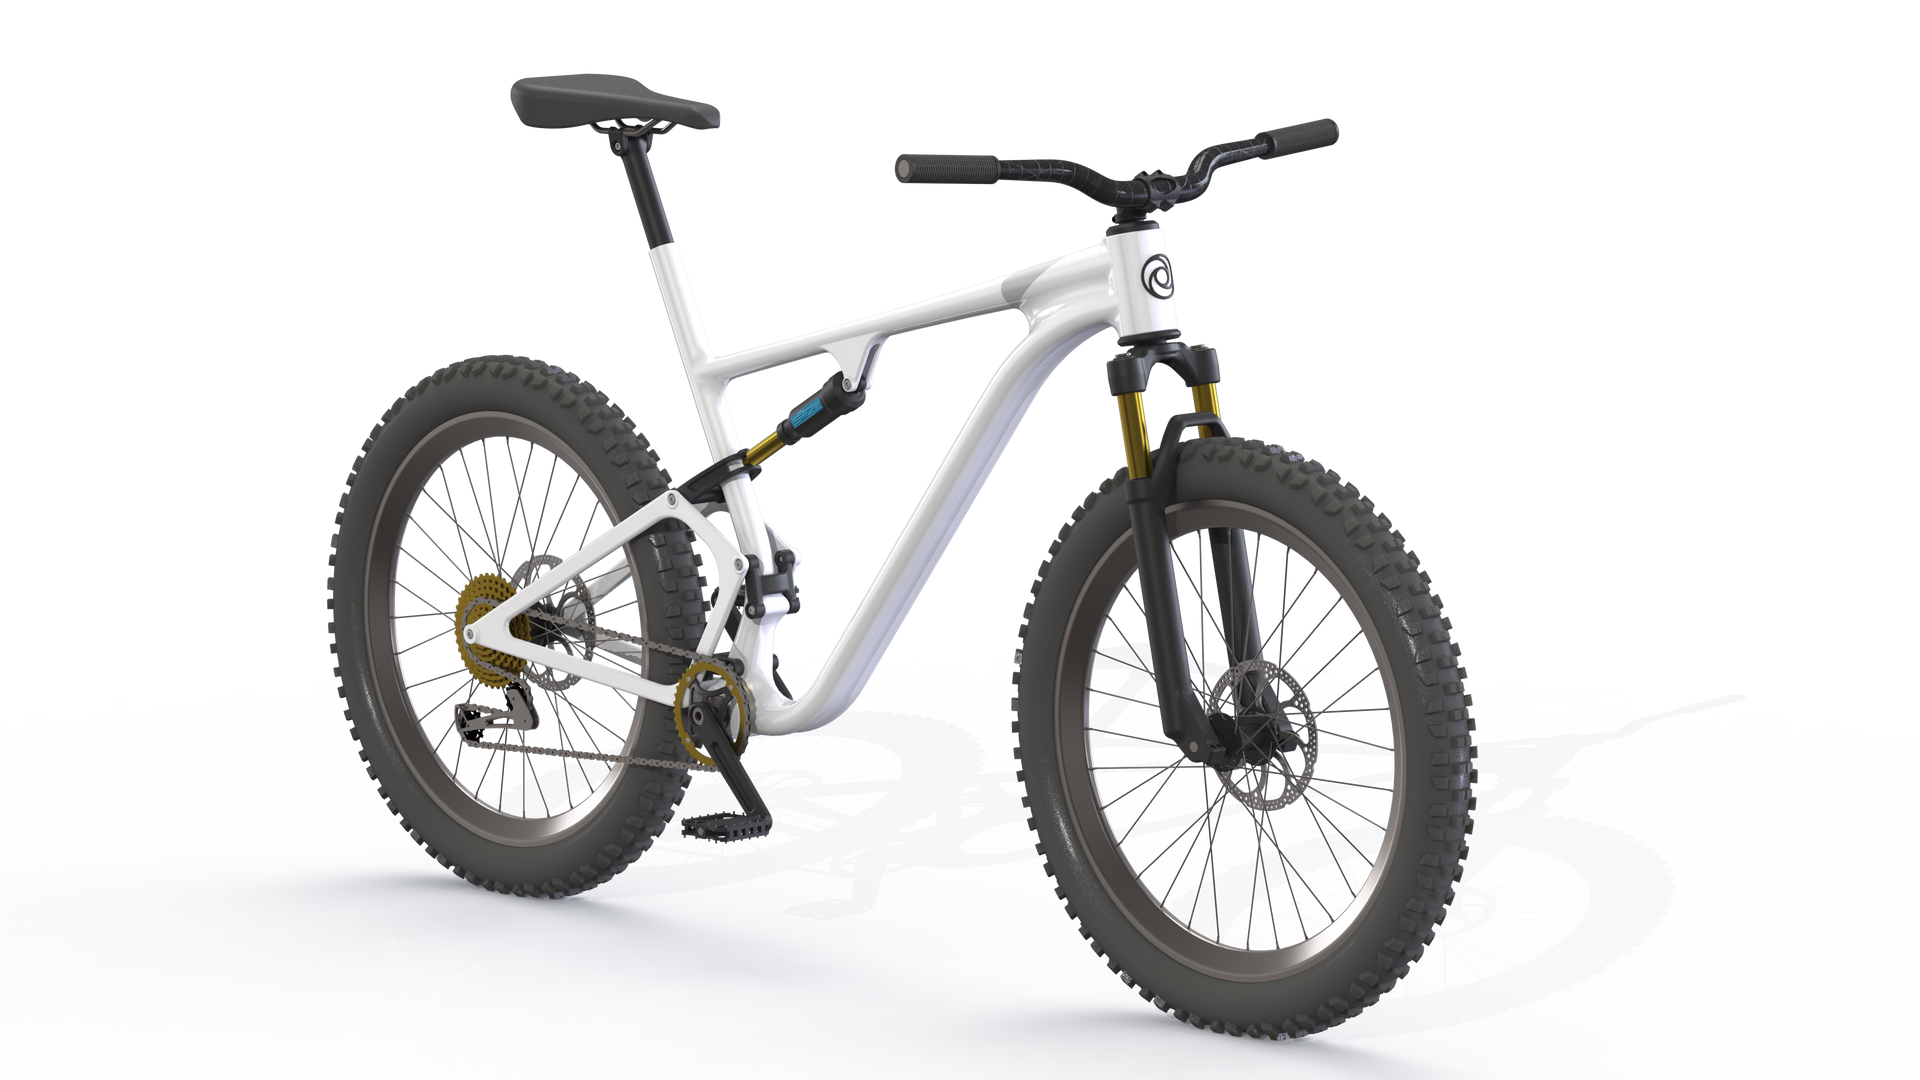 Bike design of a 10-speed suspension mountain bike.